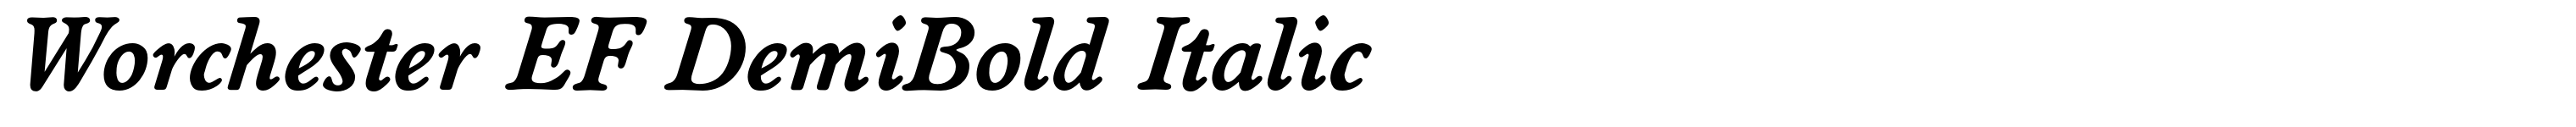 Worchester EF DemiBold Italic